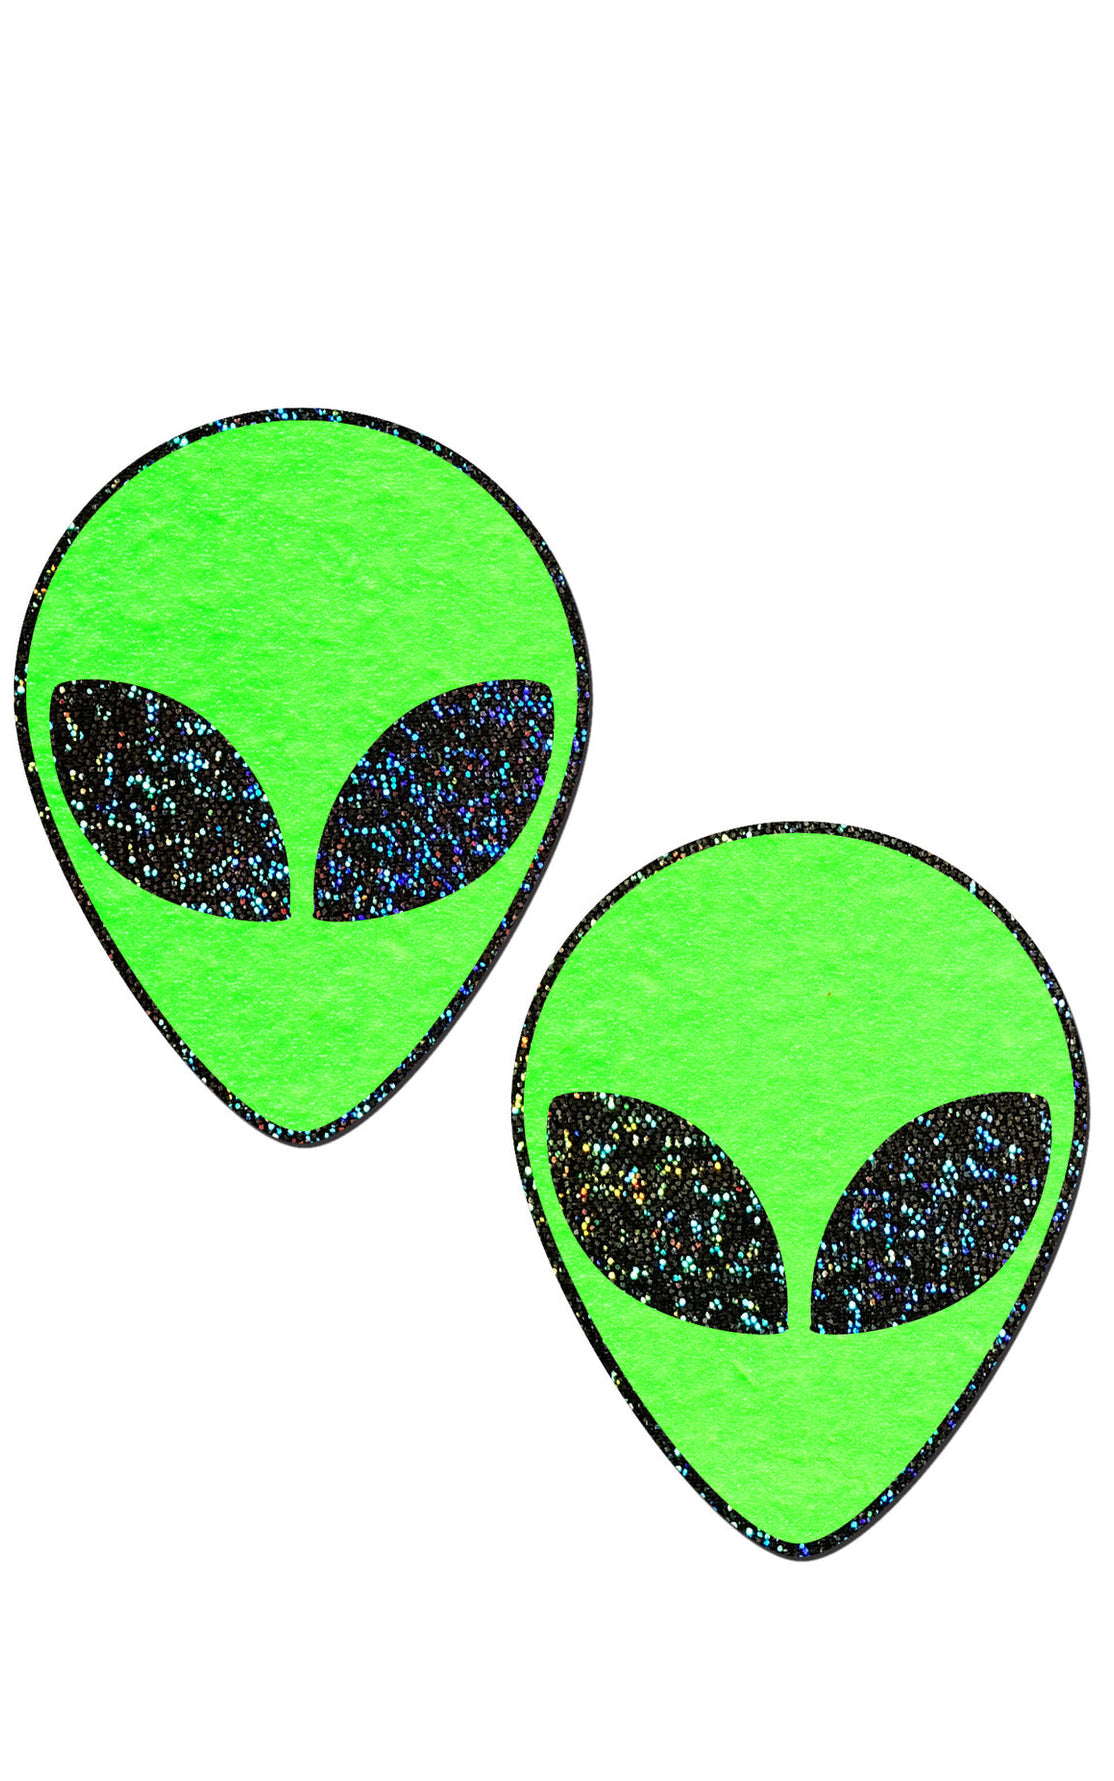 Pastease: Neon Green Alien/Glow in the Dark with Glittering Black Eyes Pasties